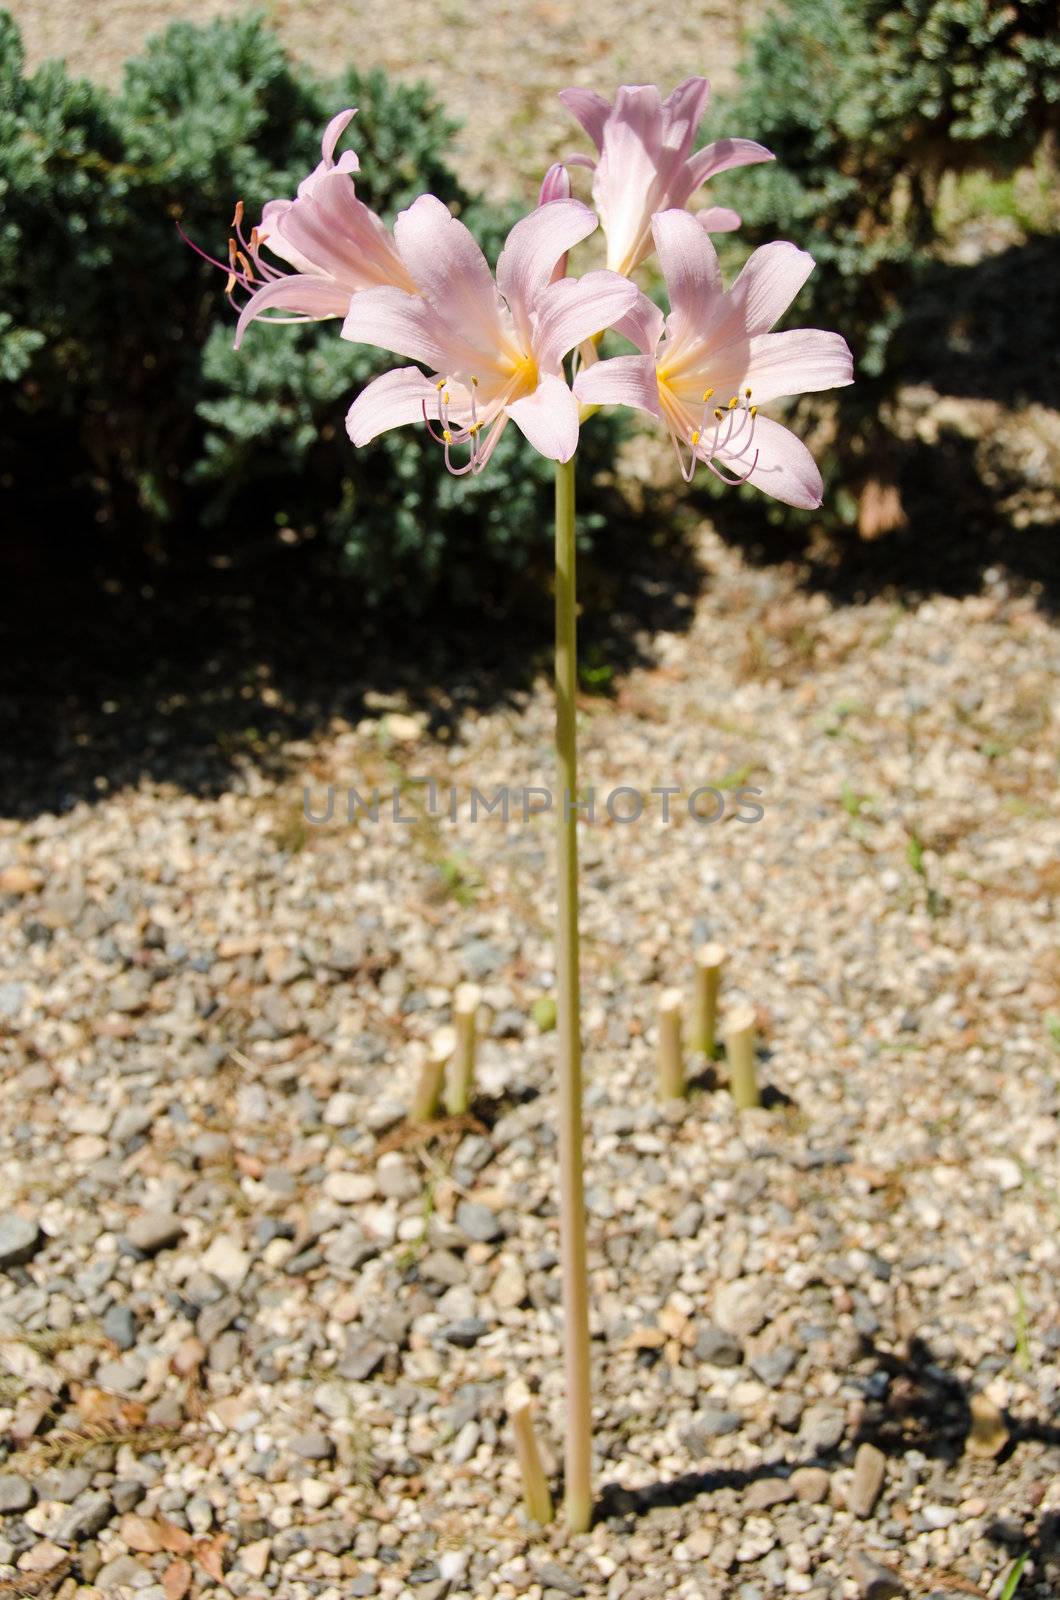 Resurrection lily, Lycoris squamigera by Arrxxx